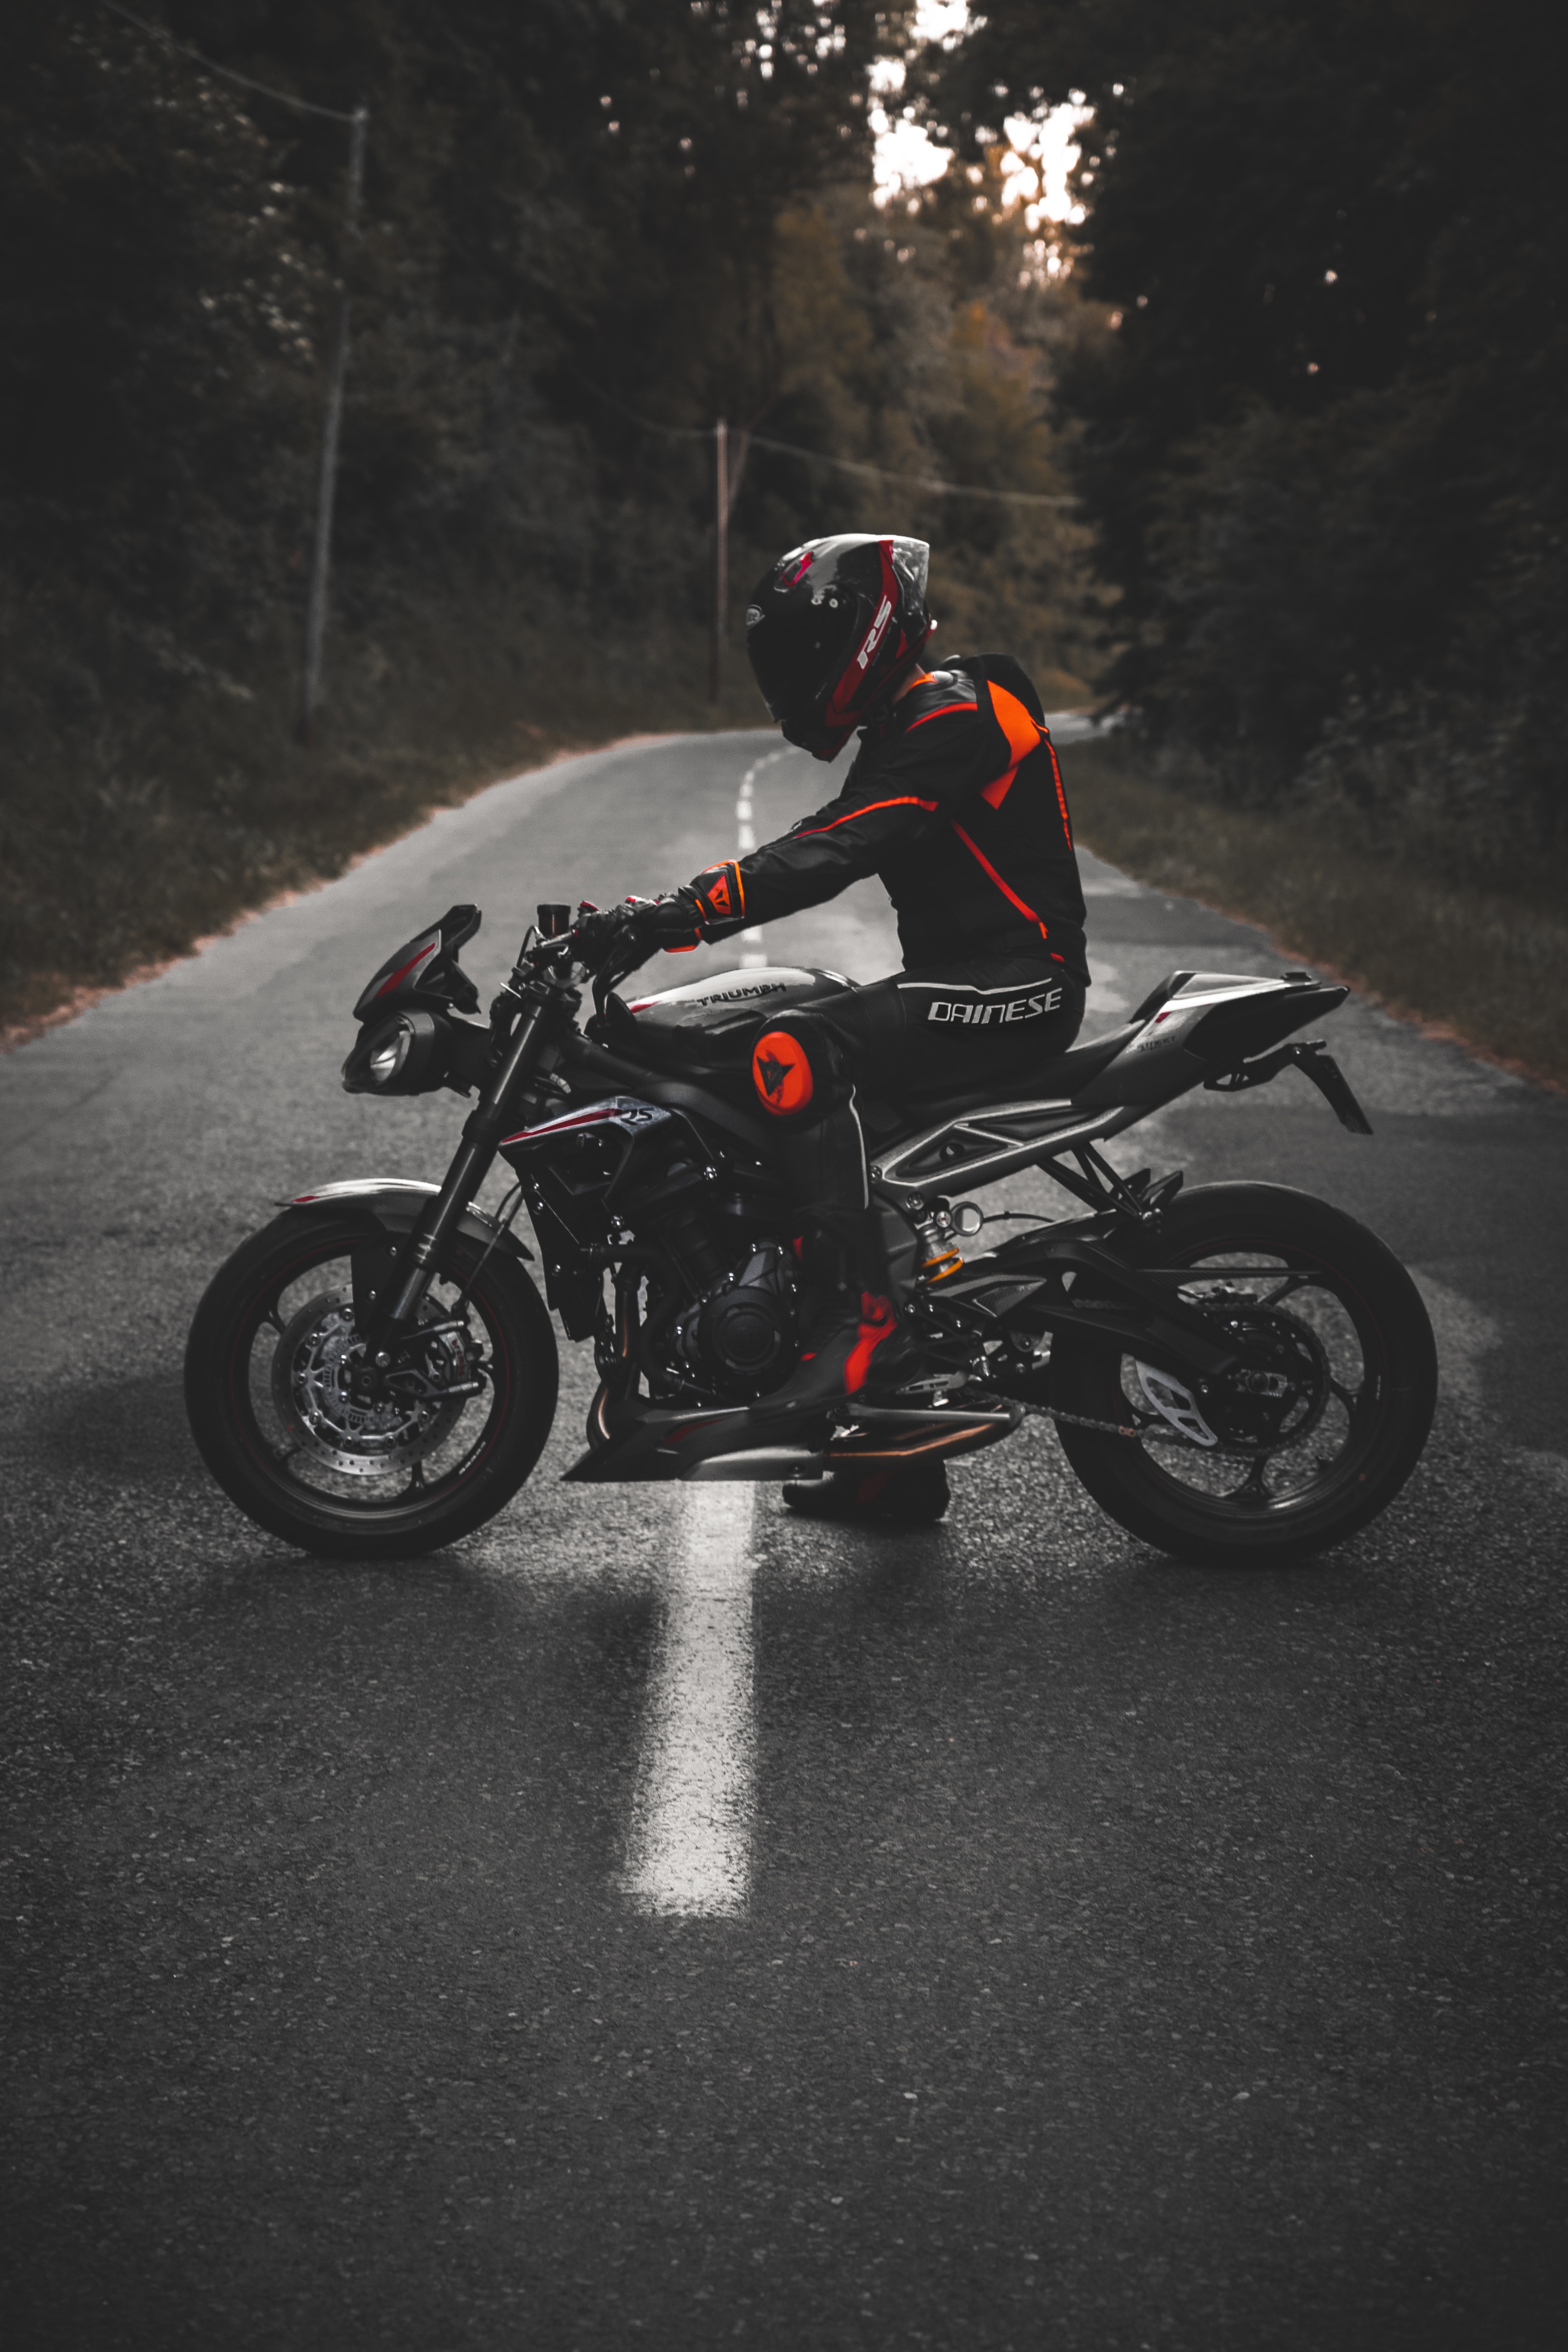 vertical wallpaper motorcycle, motorcyclist, bike, motorcycles, helmet, equipment, outfit